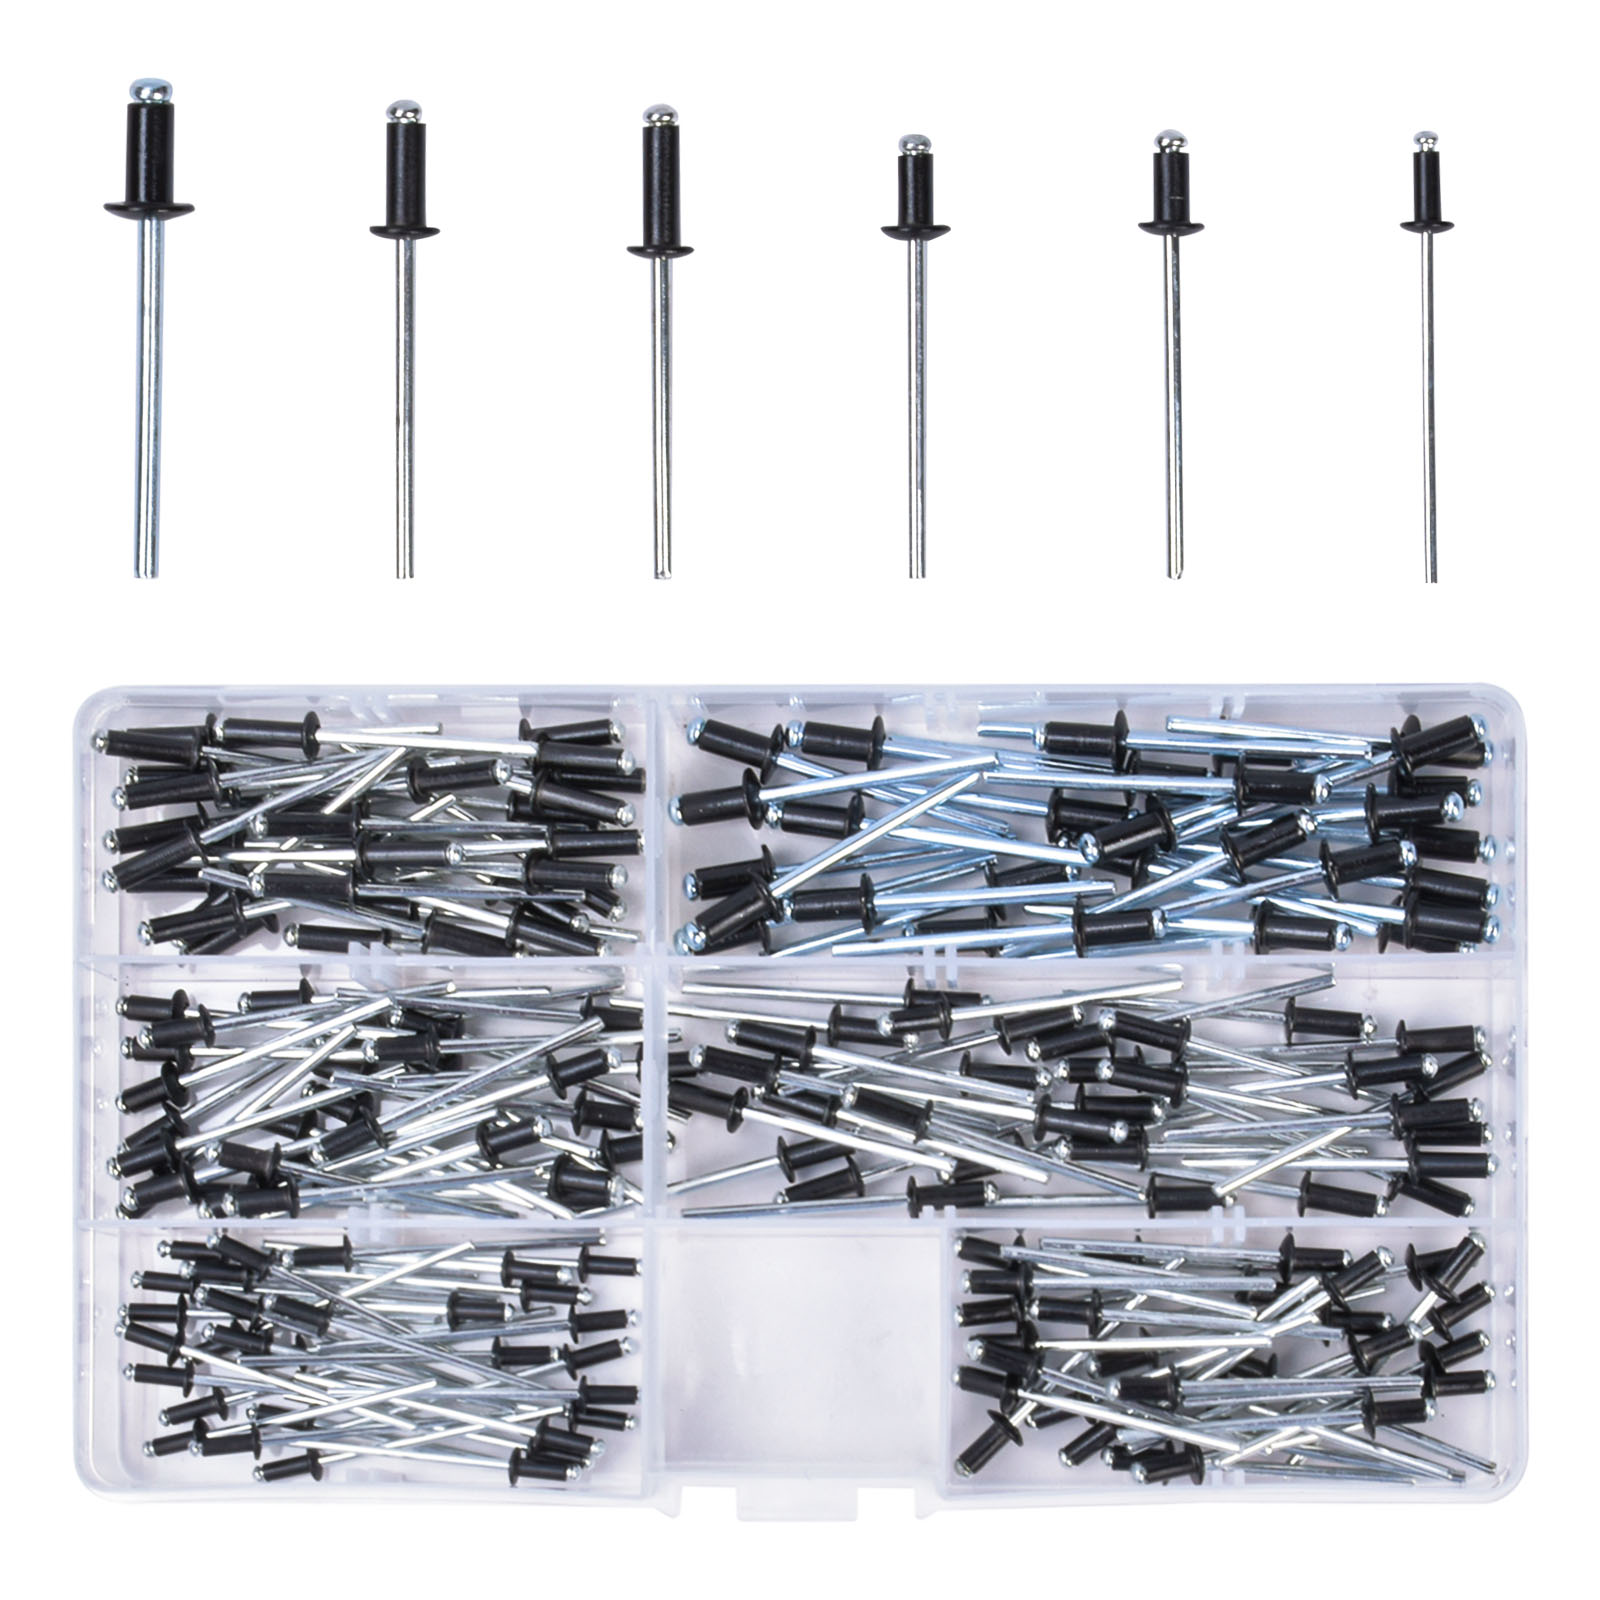 SIZEJIN 505pcs Aluminum Pop Rivets for Metal, Blind Rivets Assortment Kit,  1/8 3/16 5/